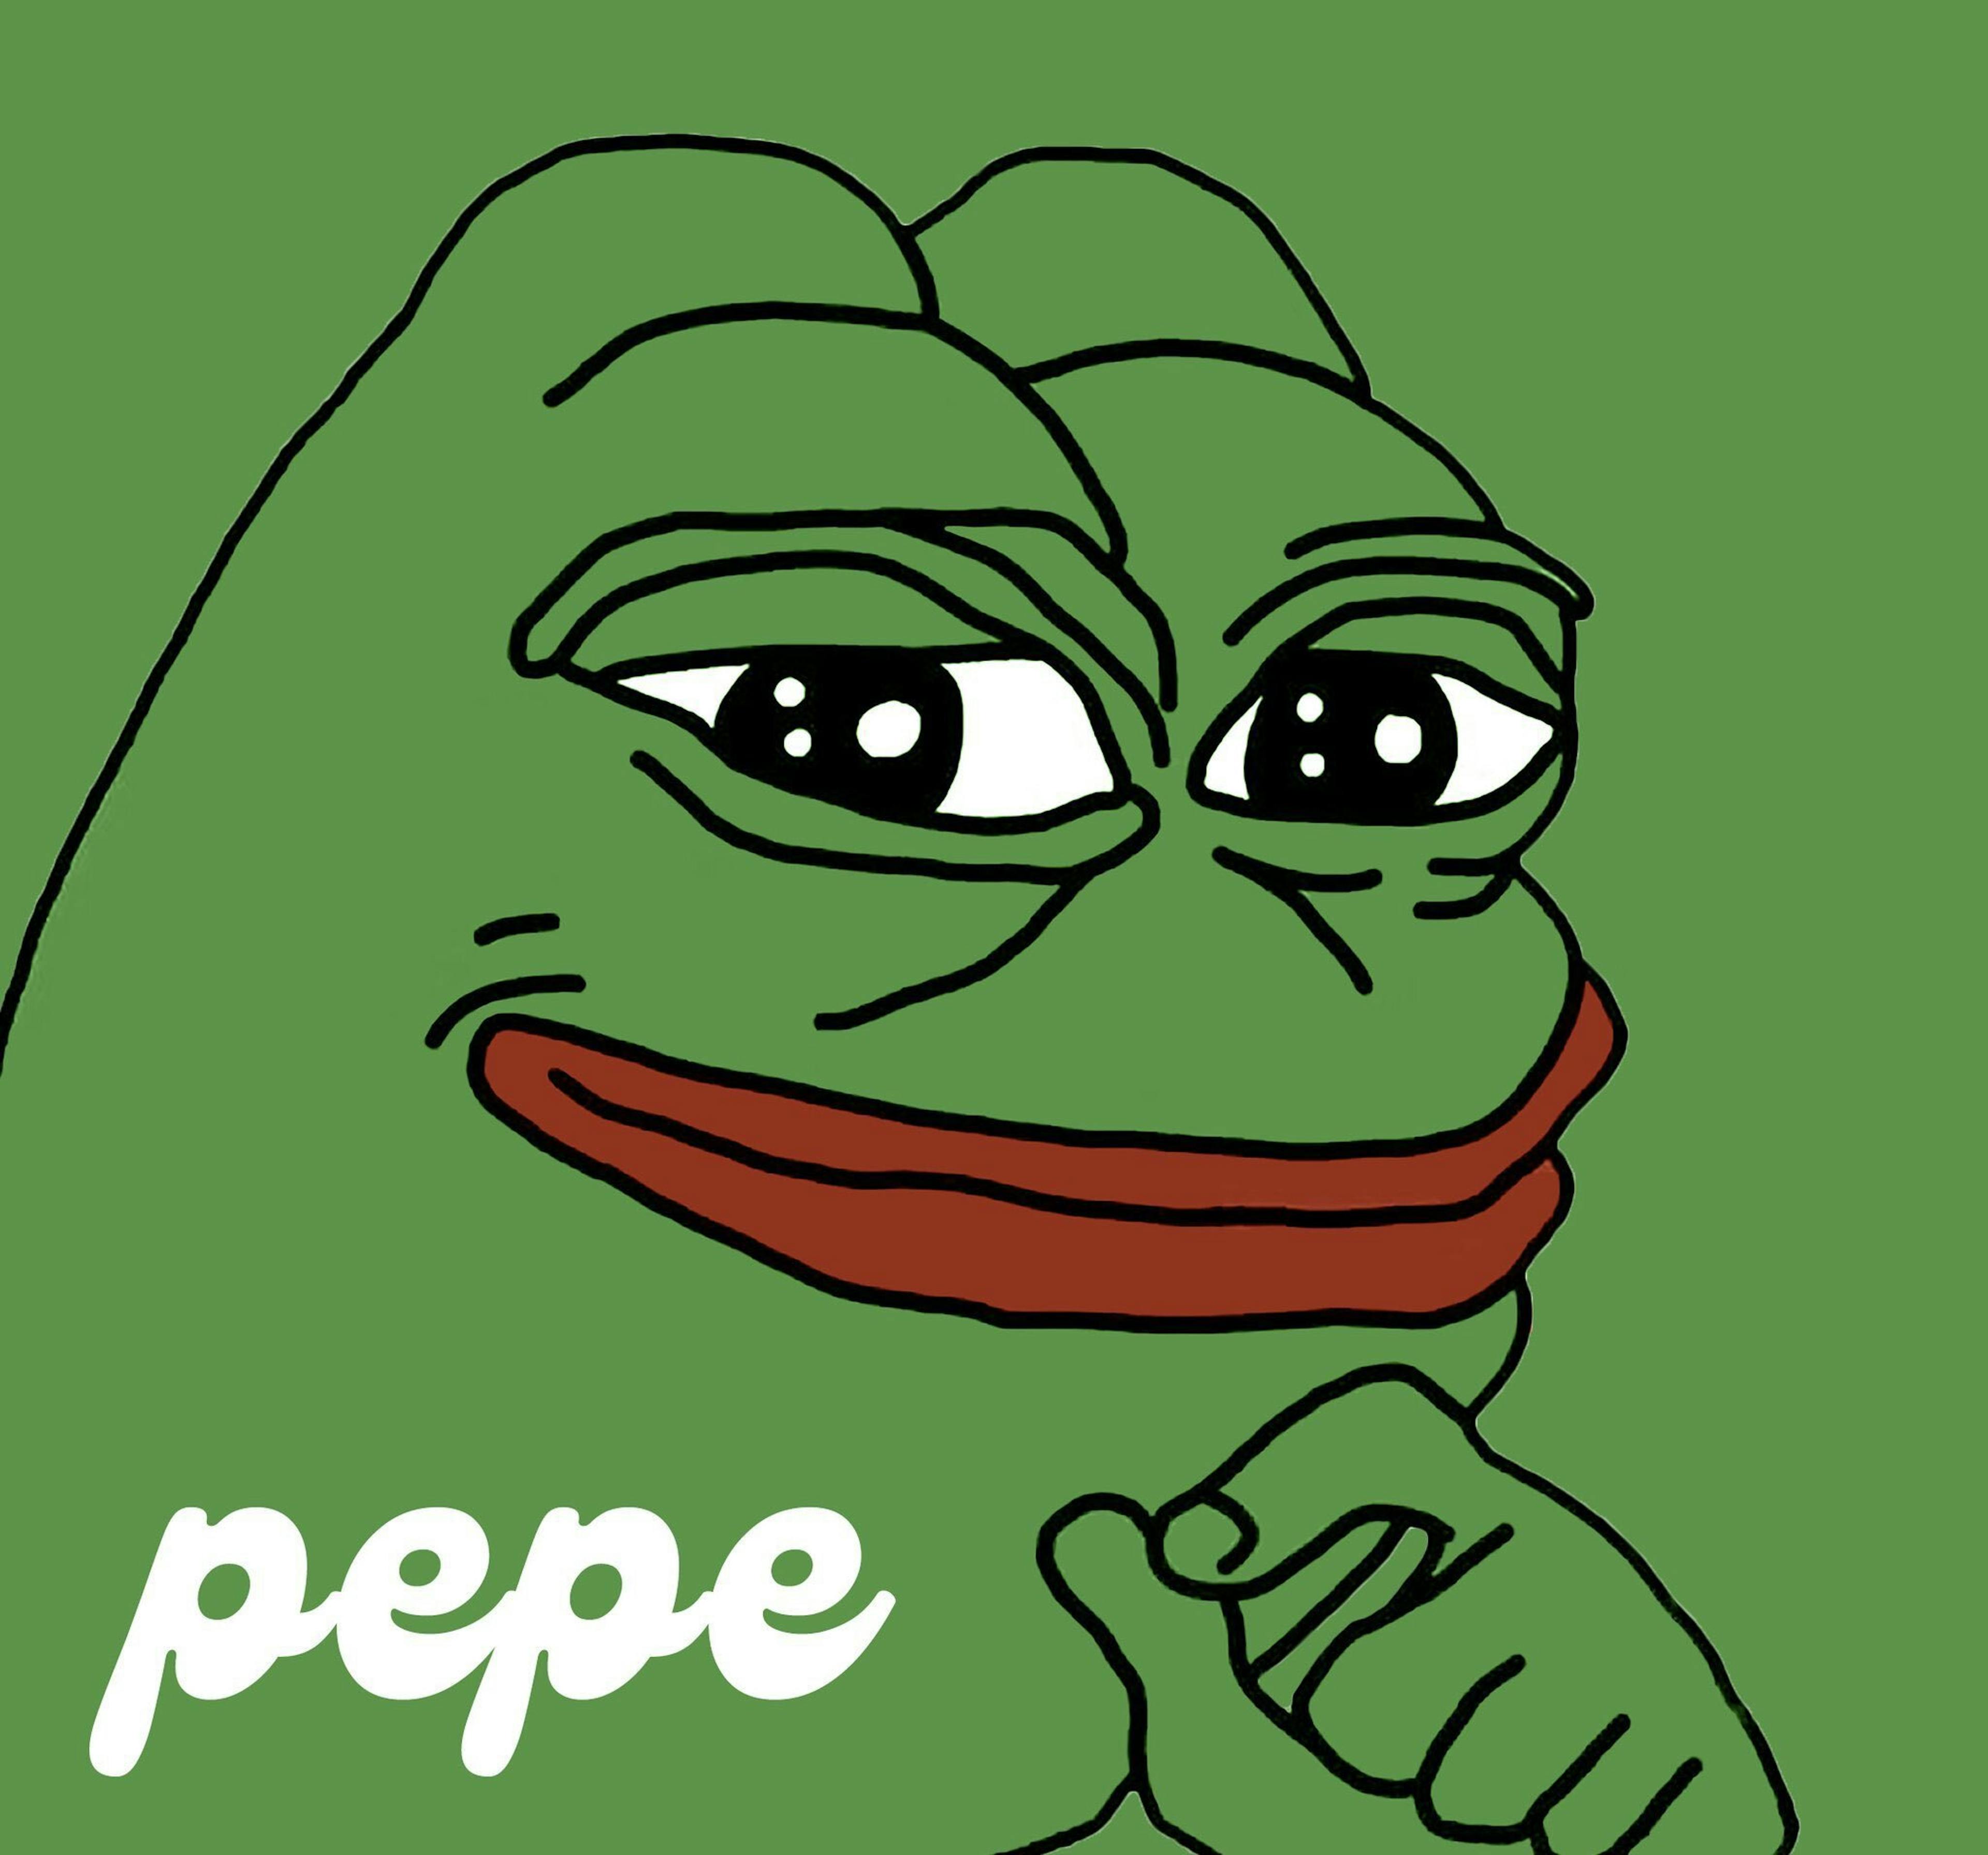 Pepe coin